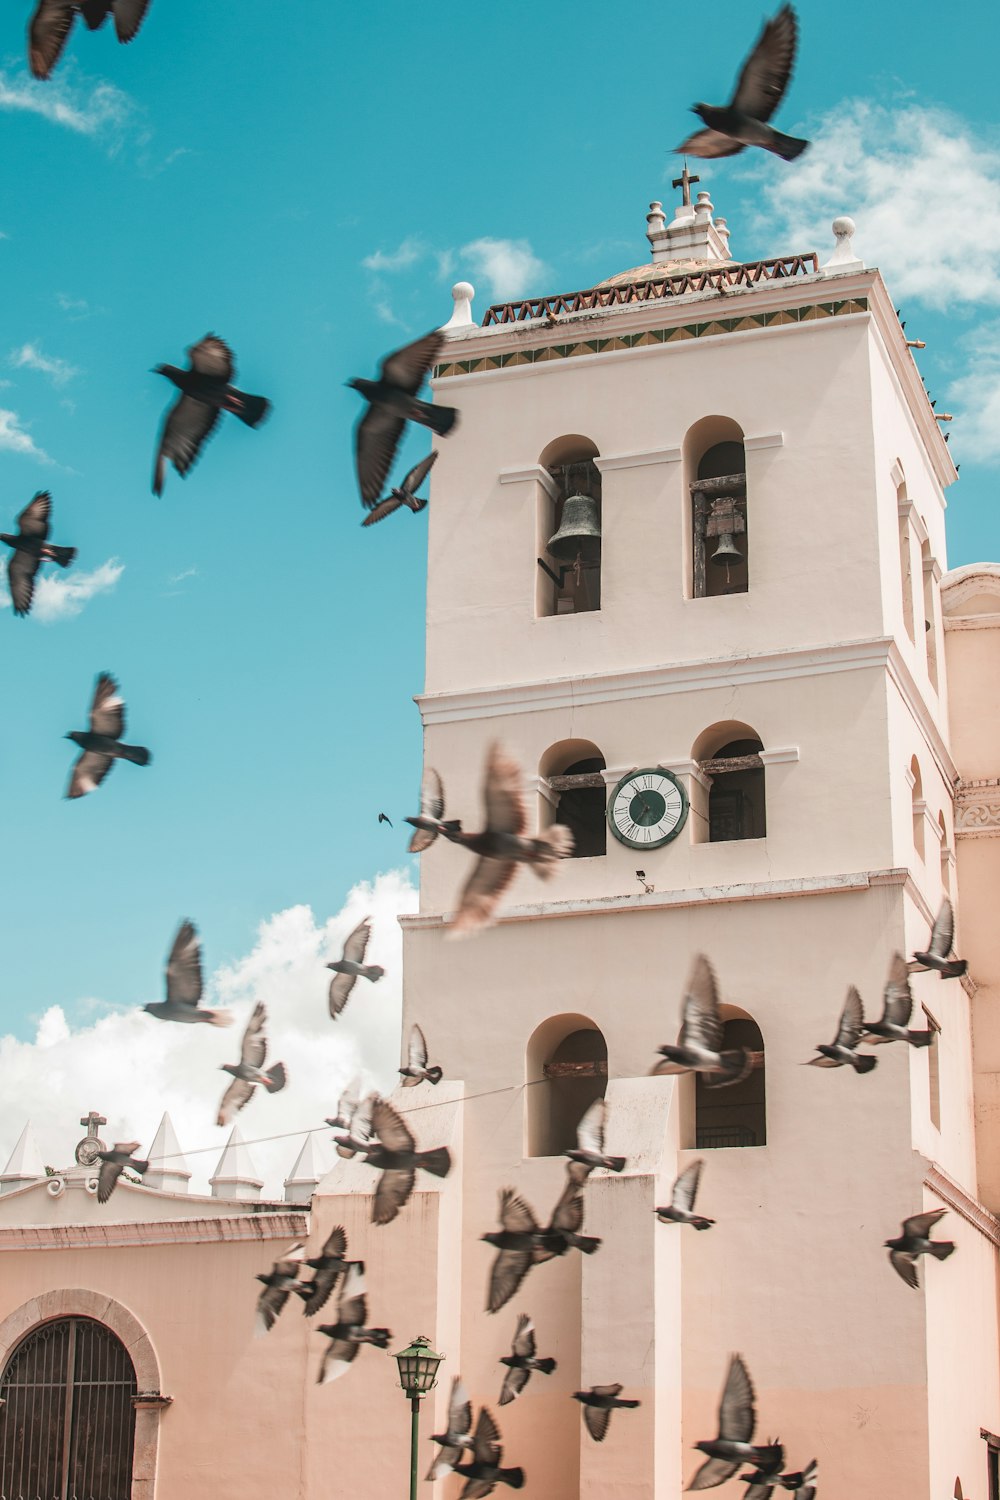 birds flying around a building